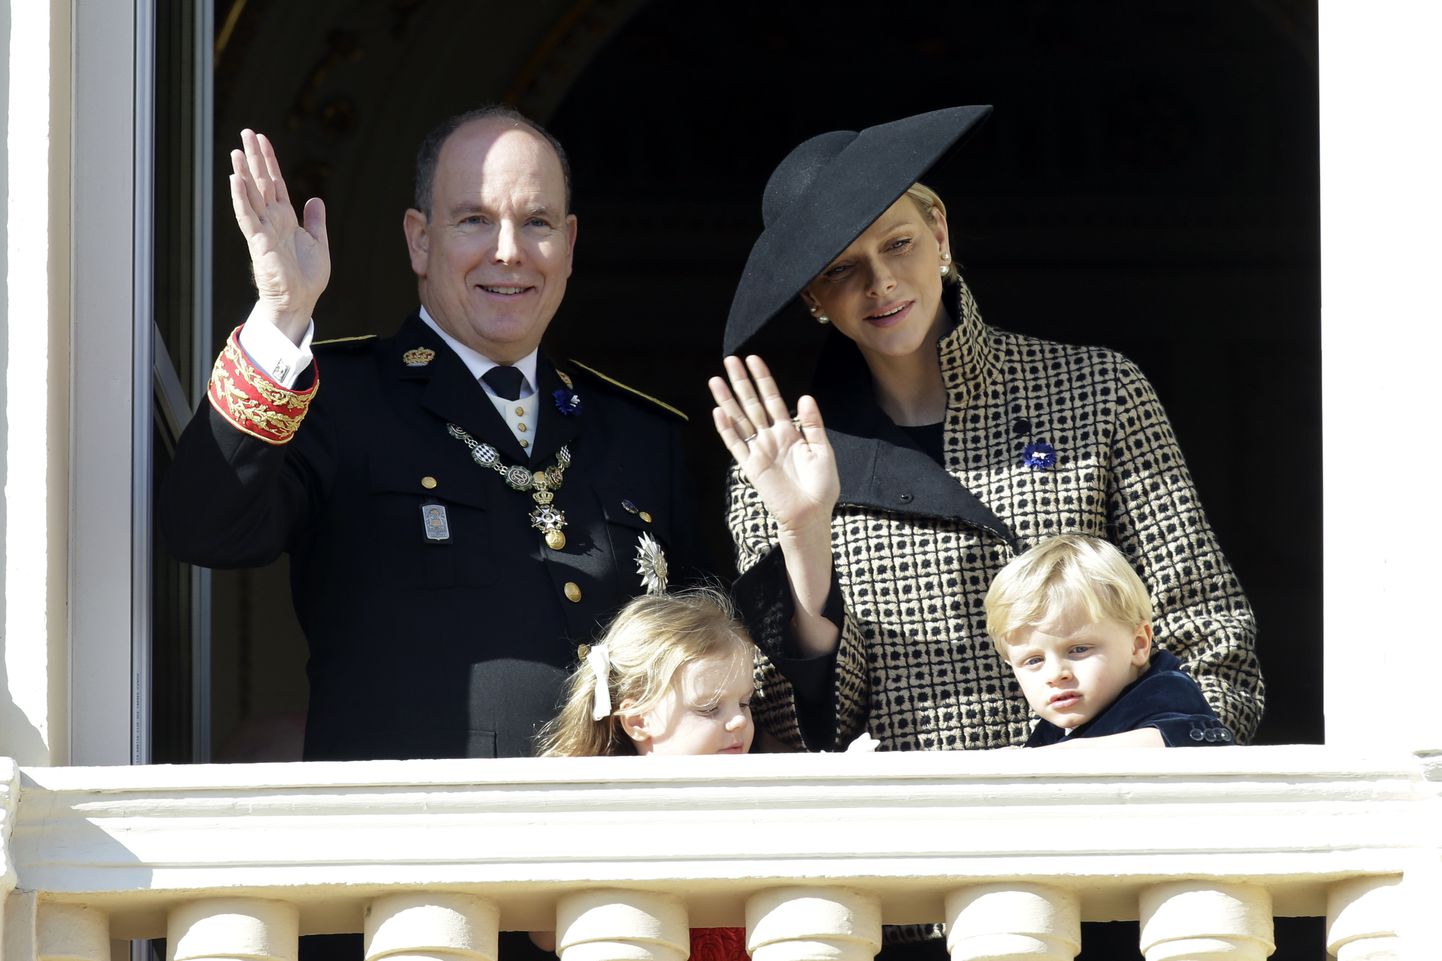 Monaco vürst Albert II, vürstinna Charlene ning nende kaksikud, printsess Gabriella ja prints Jacques